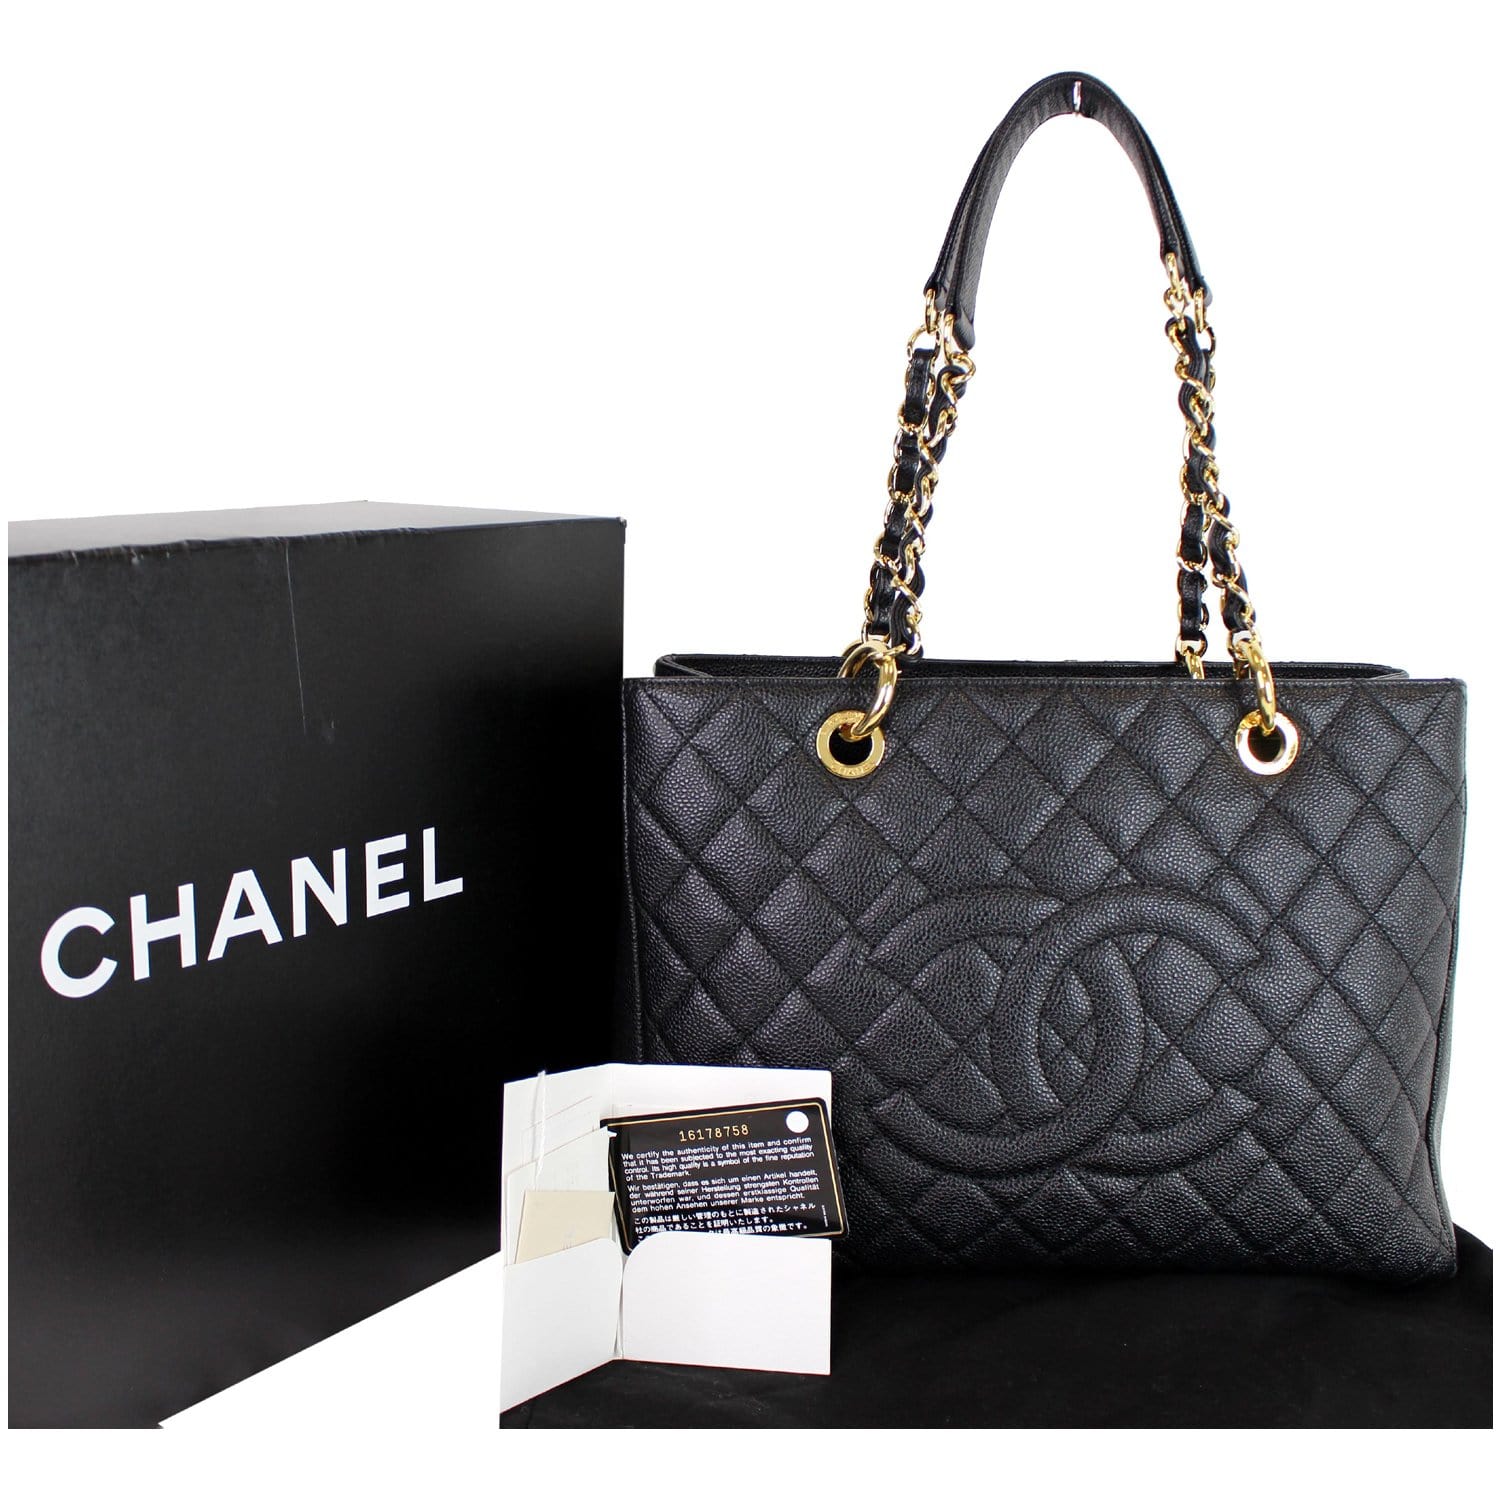 Chanel GST (Grand Shopping Tote) Black Caviar Leather & Silver Hardware